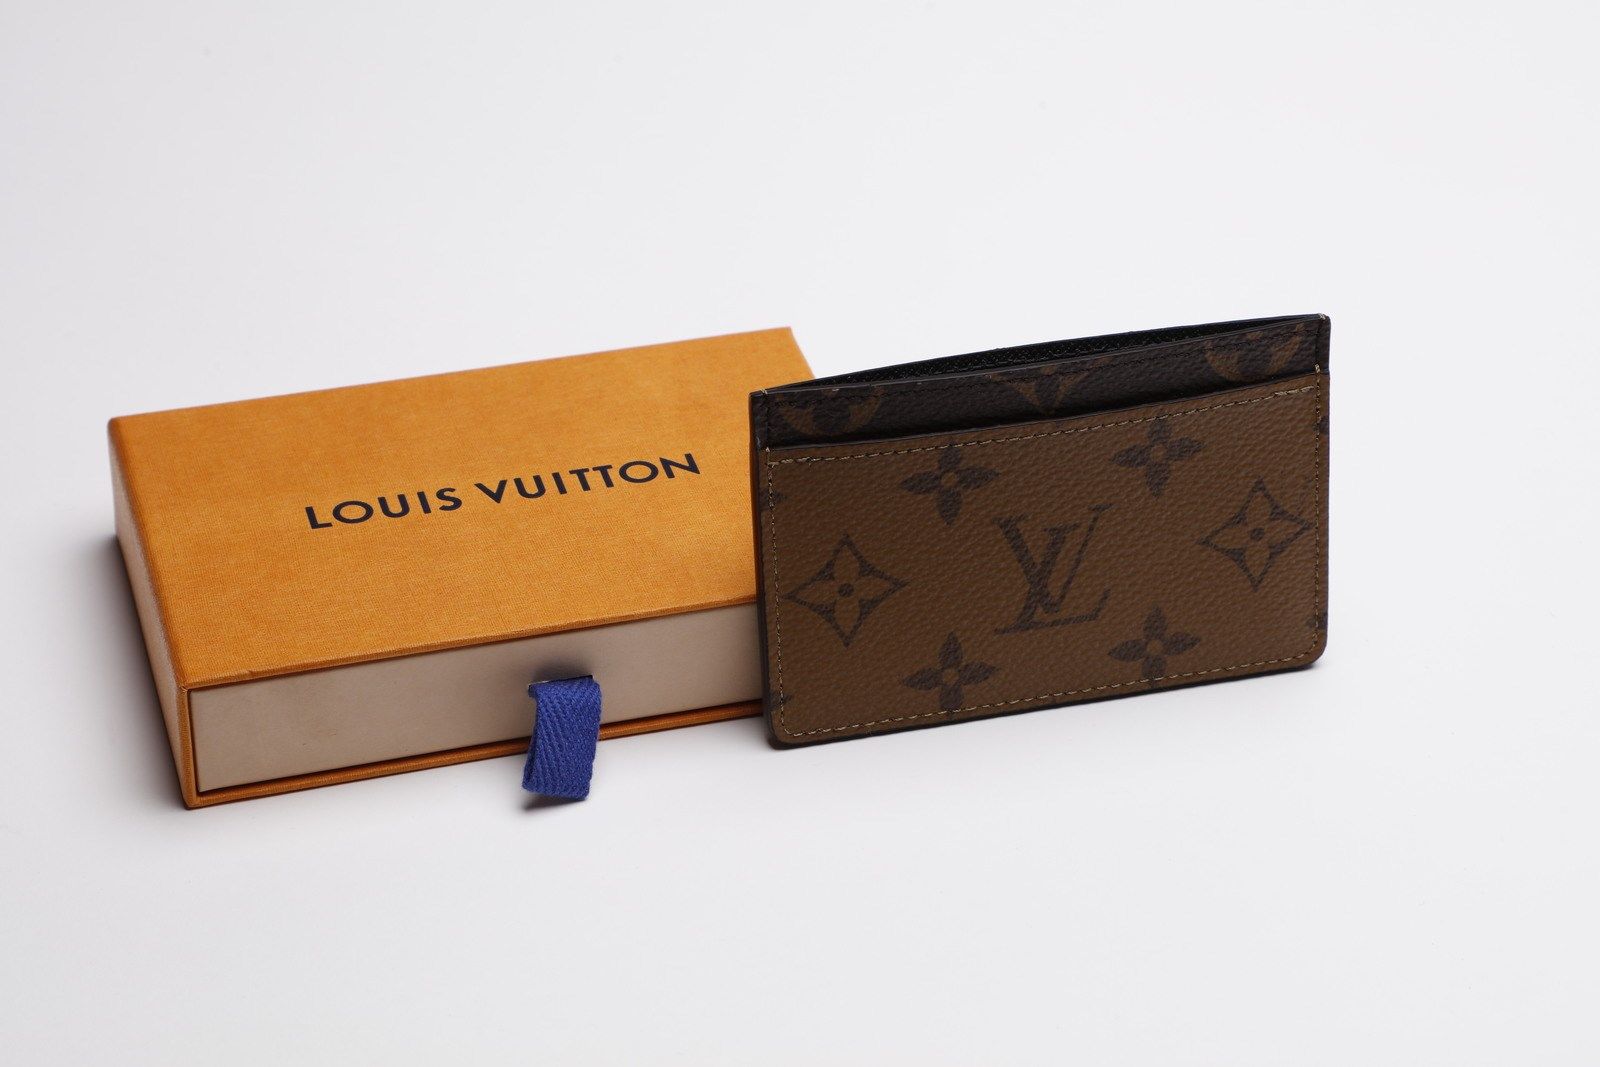 LOUIS VUITTON Credit card folder. 信用卡文件夹..原装盒中的帆布单品。